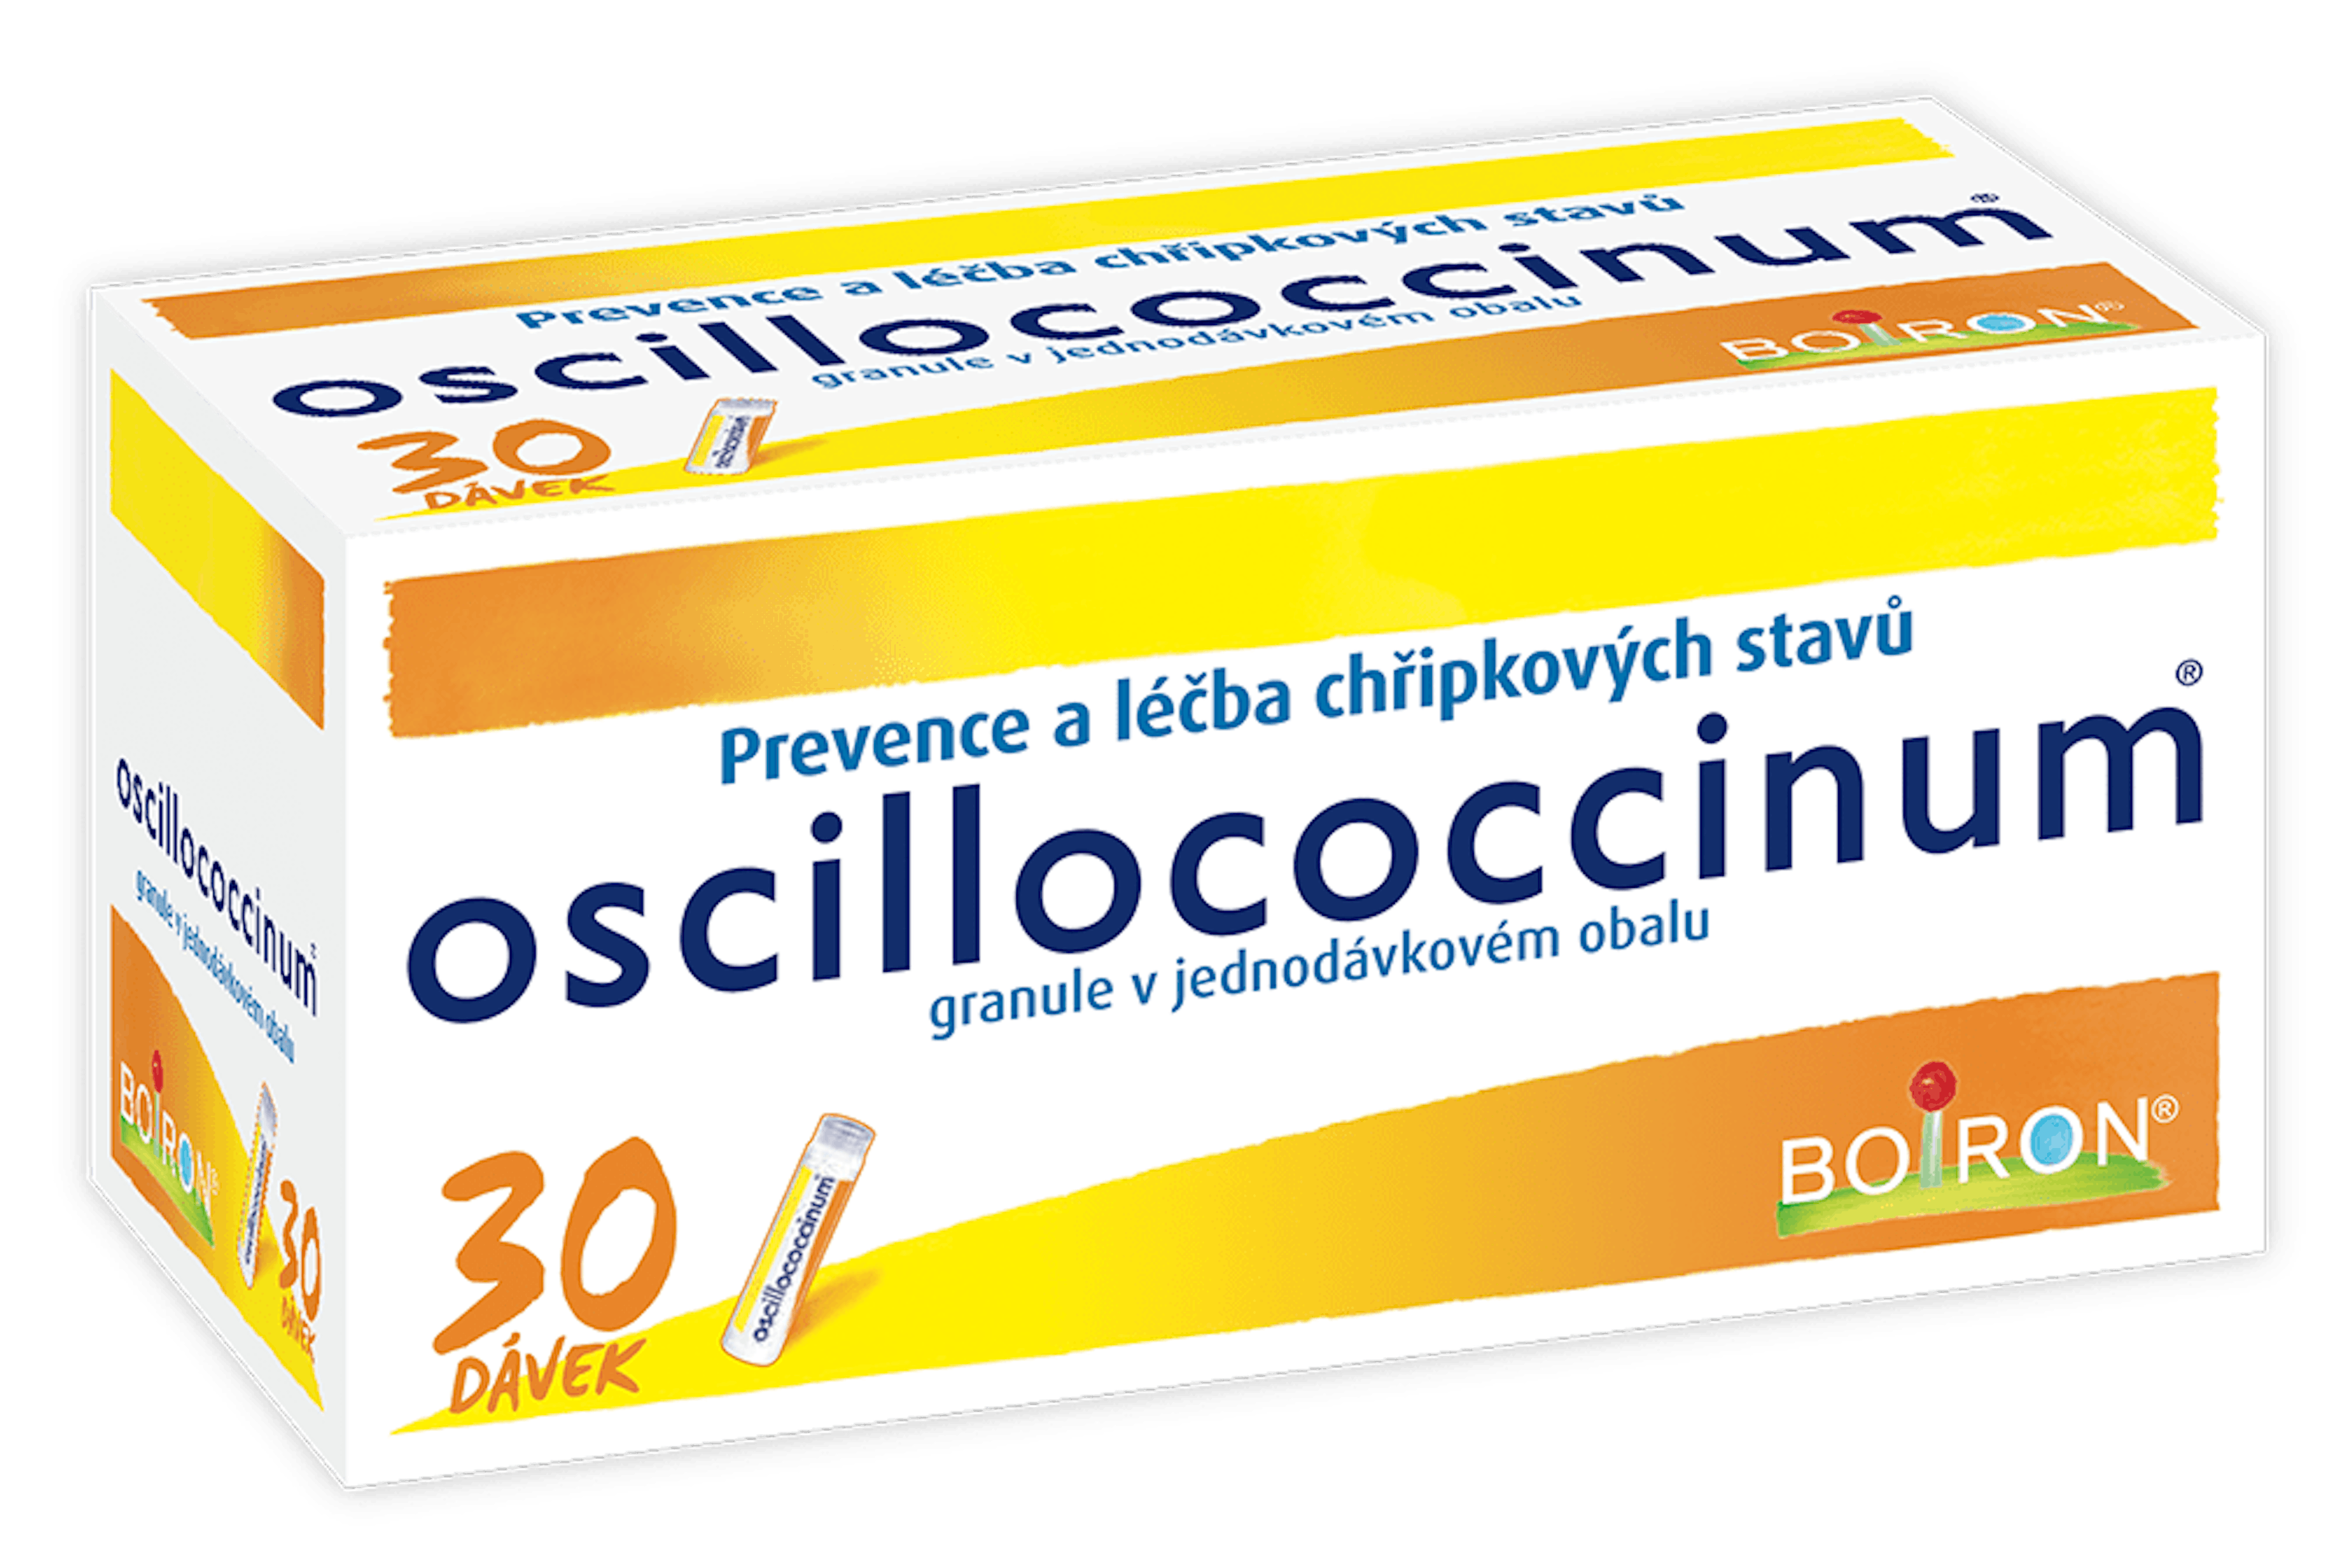 Oscillococcinum krabička